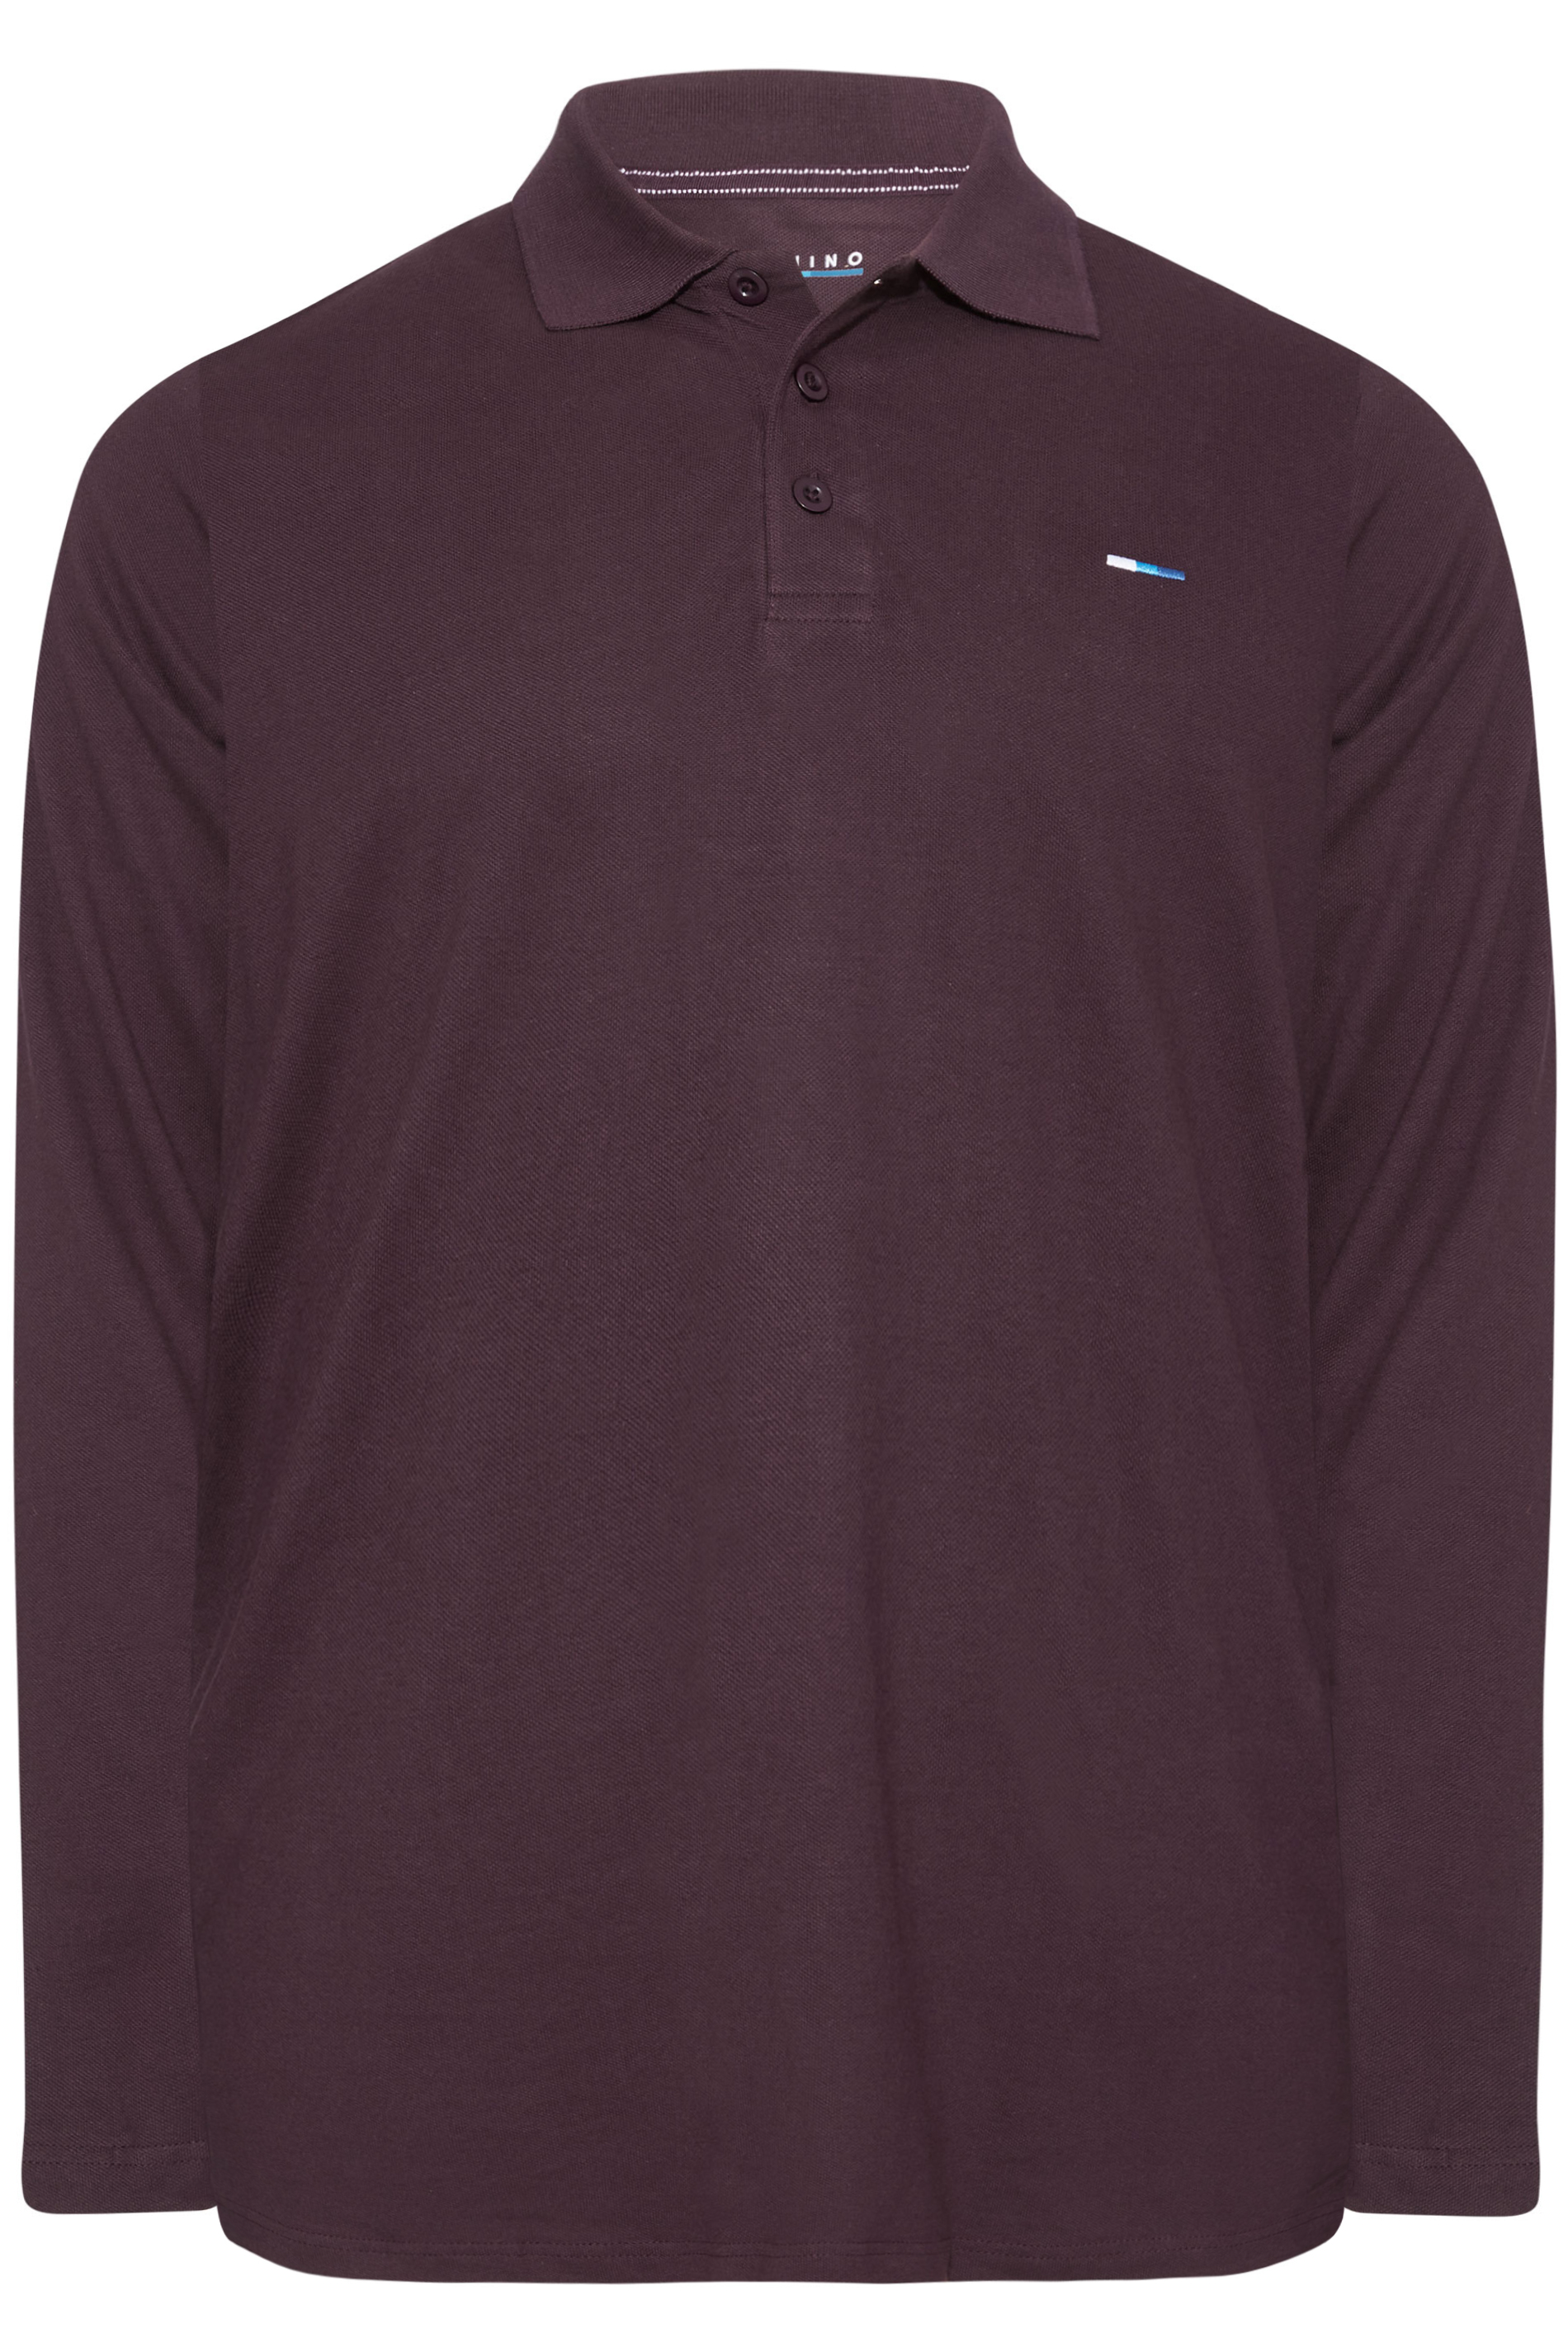 BadRhino Burgundy Red Essential Long Sleeve Polo Shirt | BadRhino 3